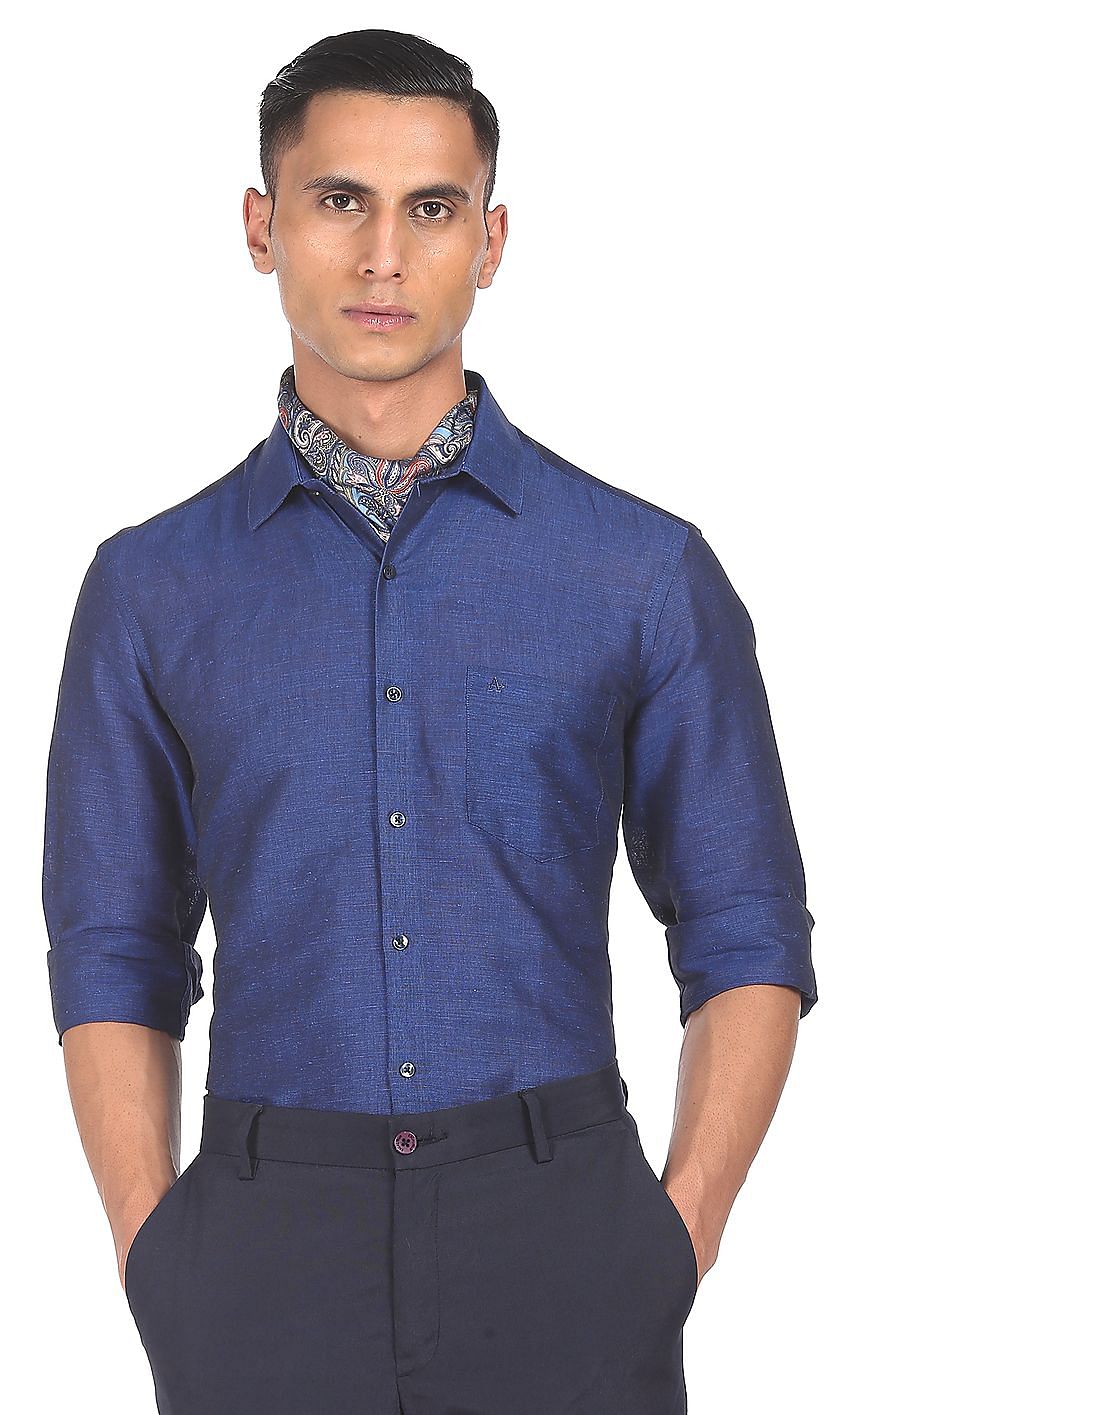 Buy Arrow Spread Collar Solid Shirt - NNNOW.com